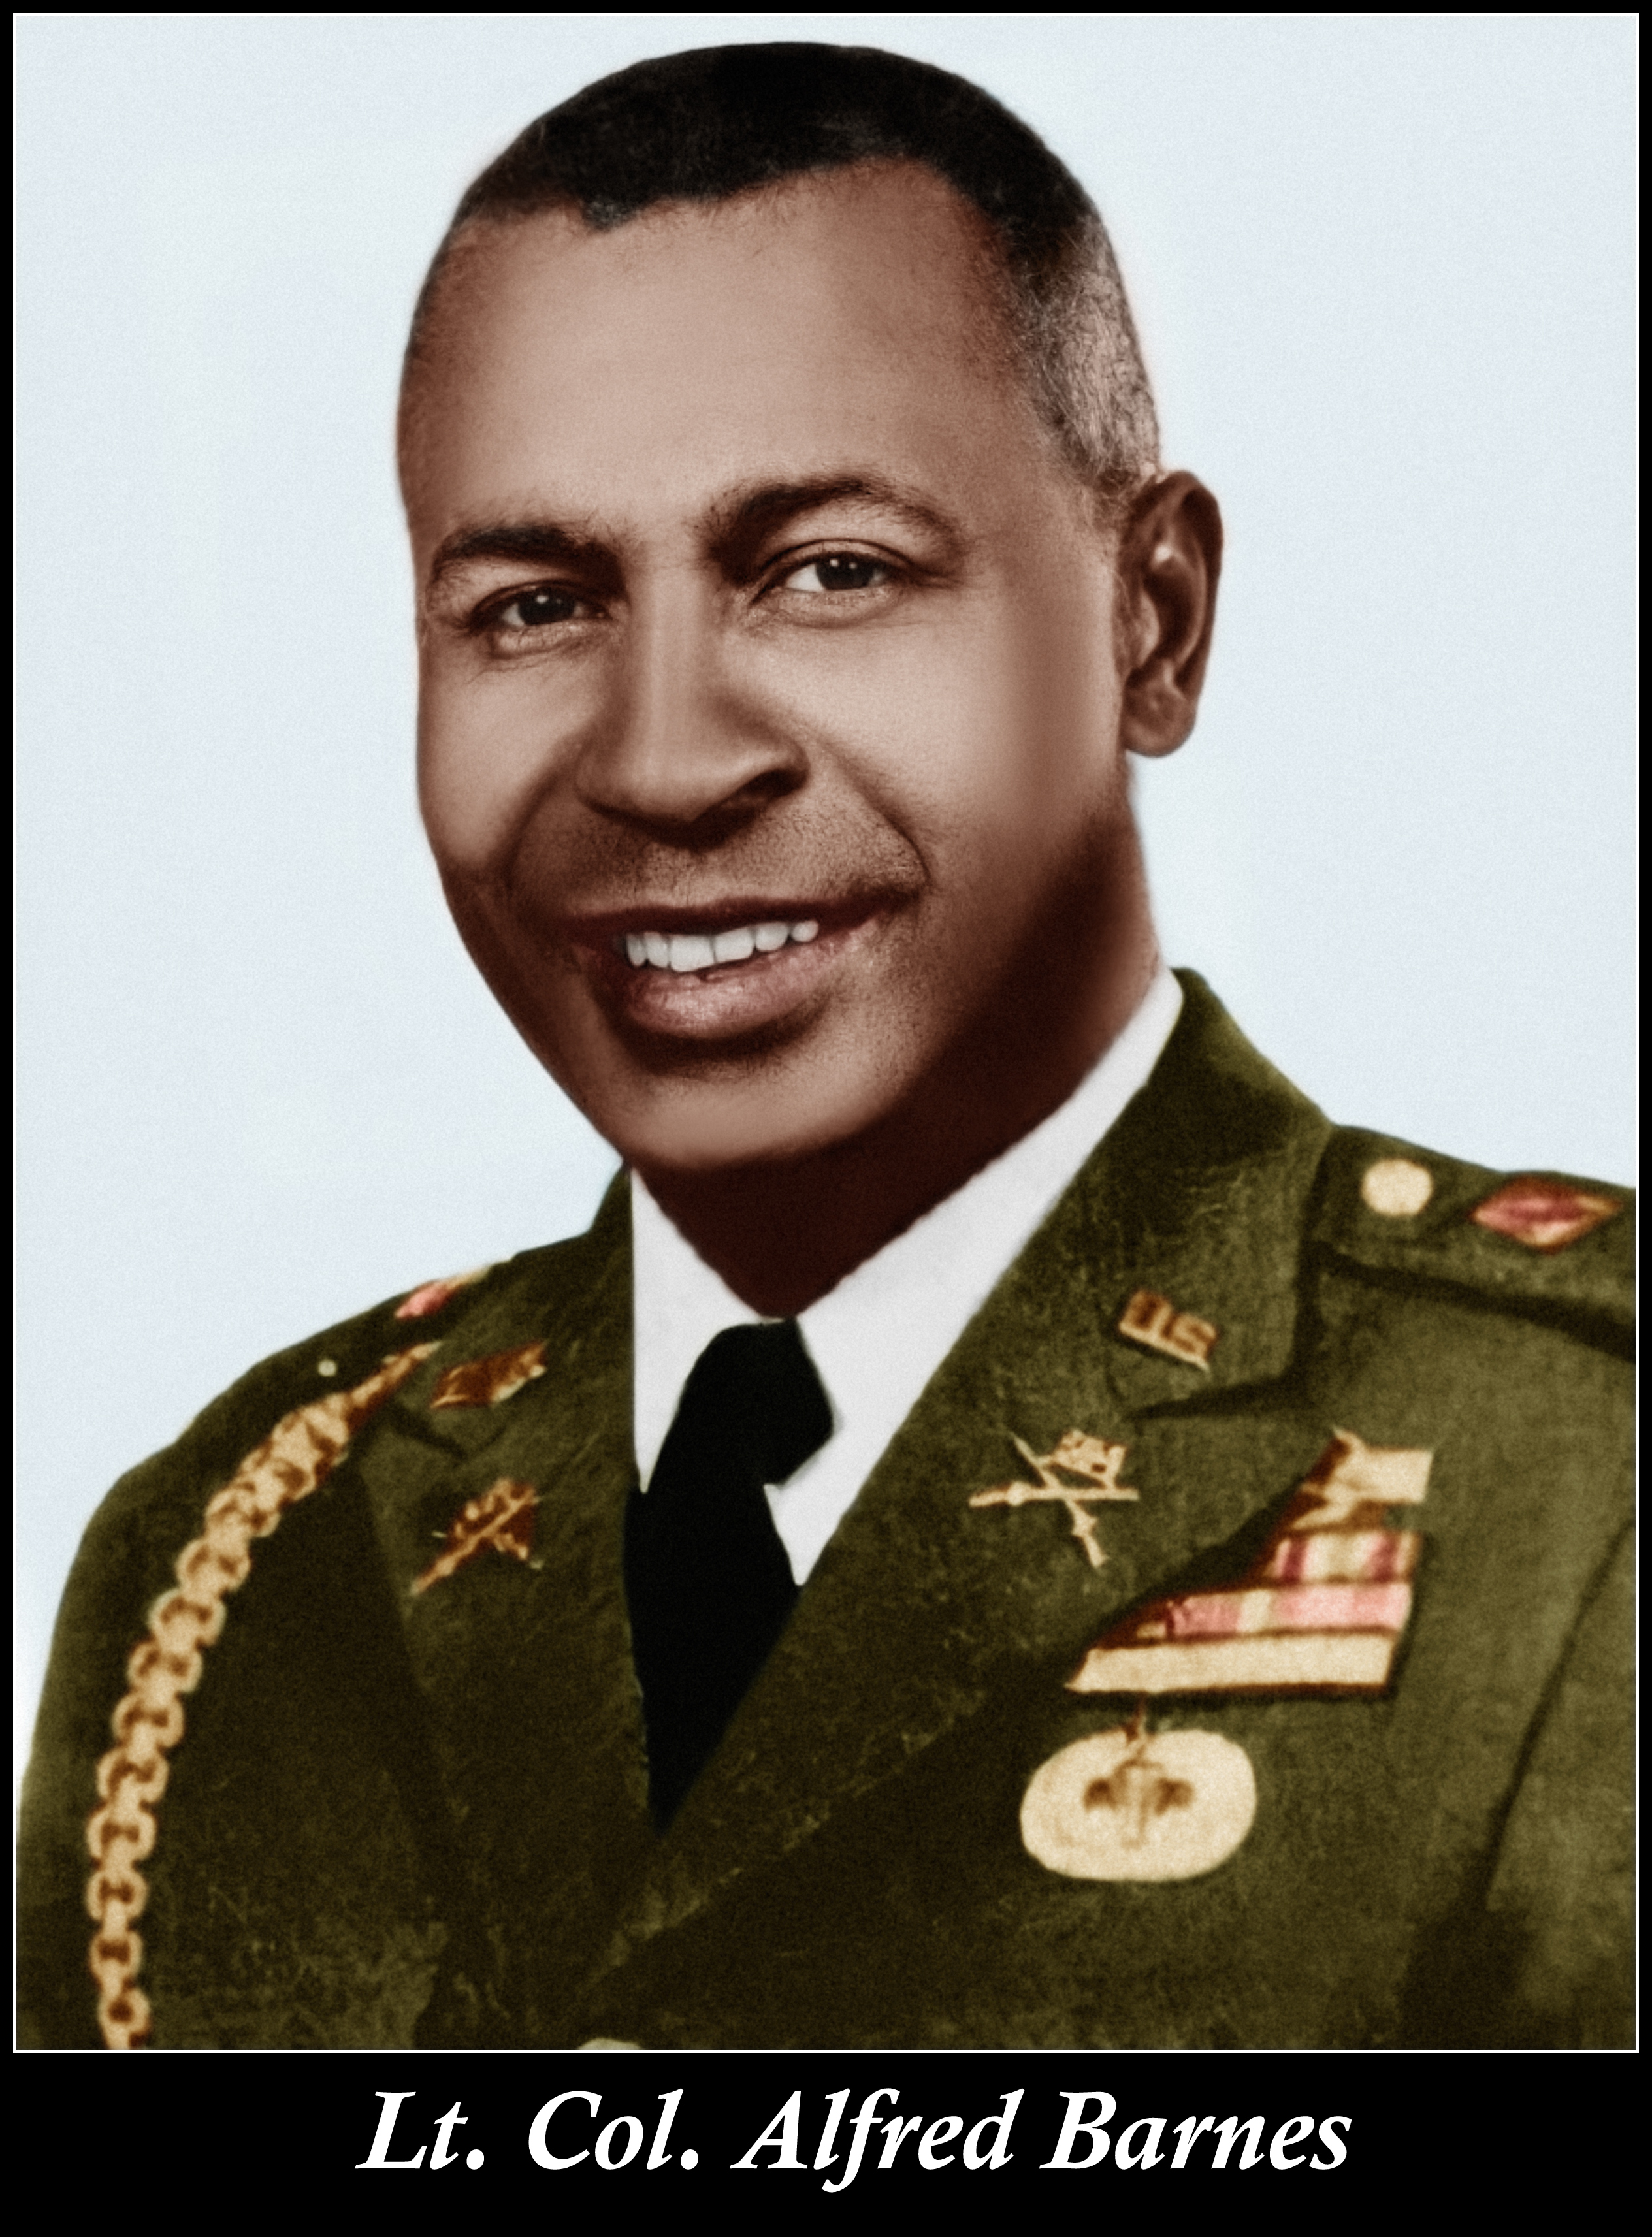 Lt. Col. Alfred Barnes, of Belleville and Montclair NJ, KIA Vietnam